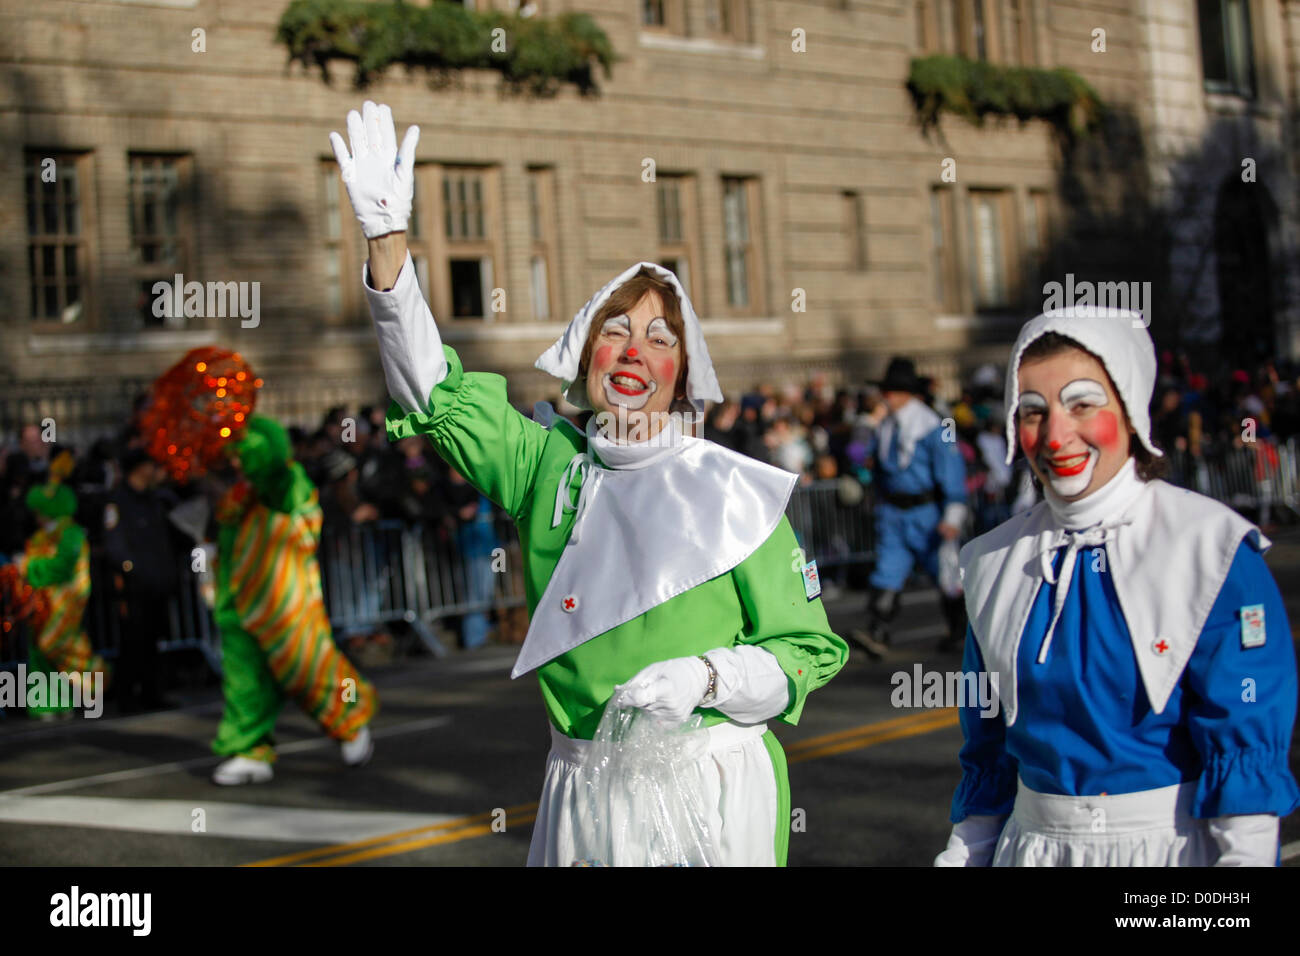 Clowns in pilgrim costumes n Macy's Thanksgiving Day Parade in New York City, on Thursday, Nov. 22, 2012. Stock Photo